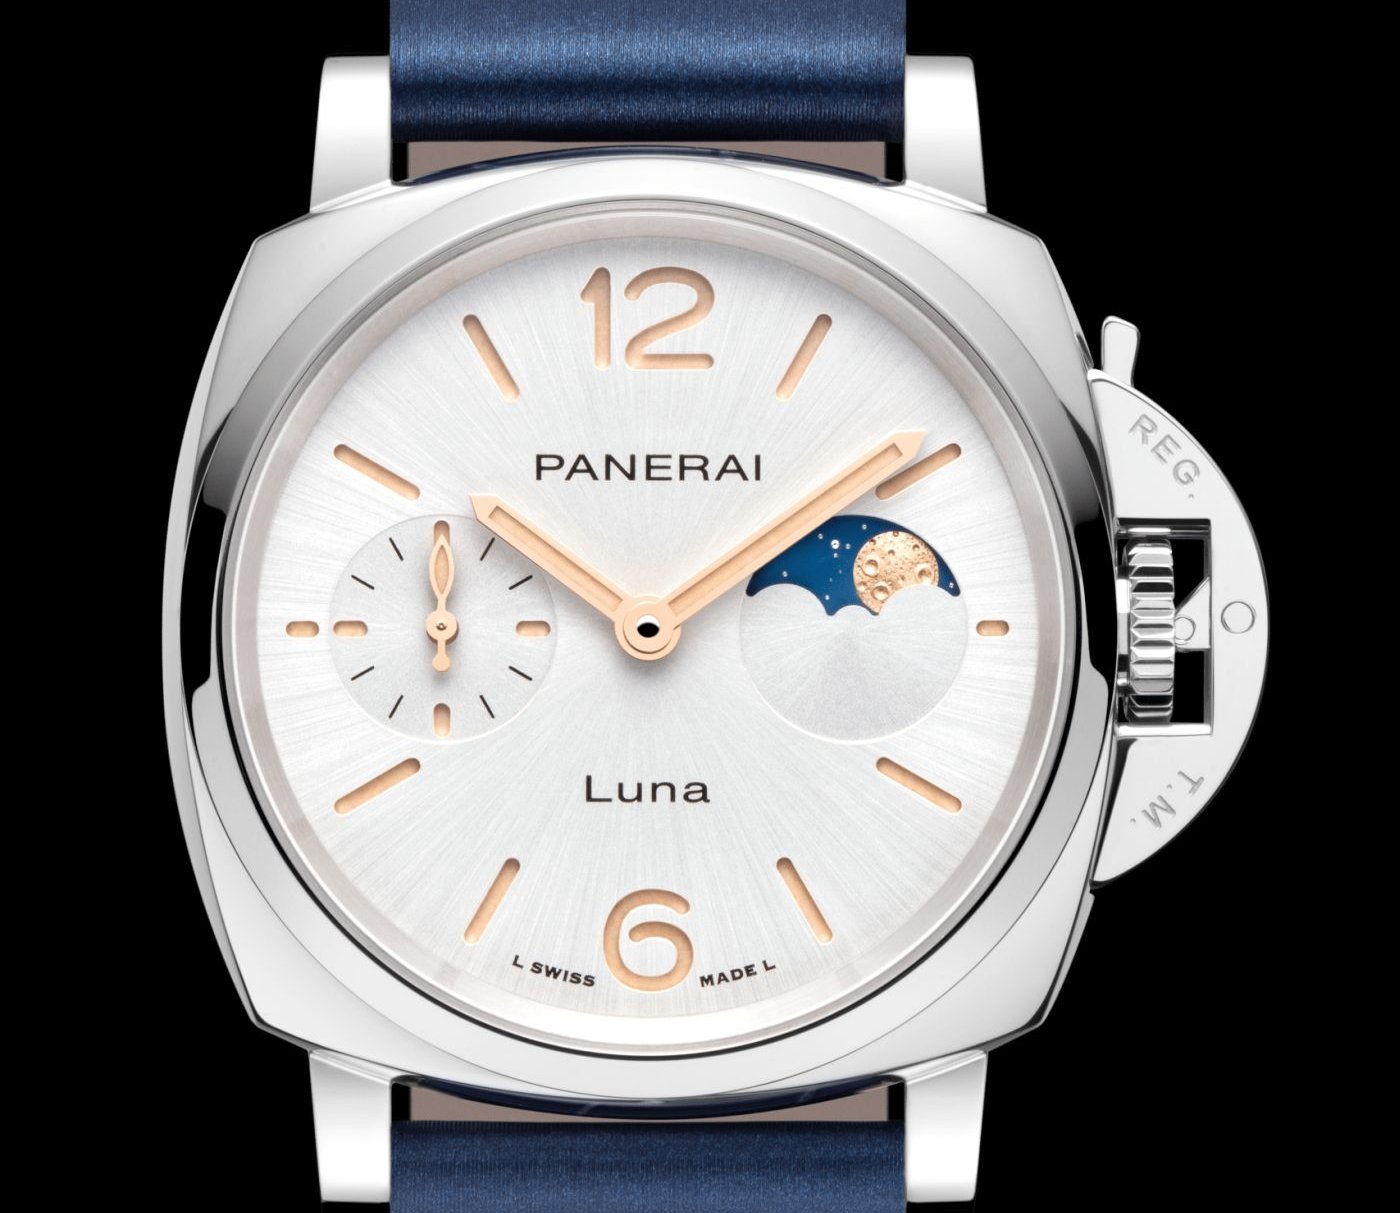 Panerai presents the Luminor Due Luna